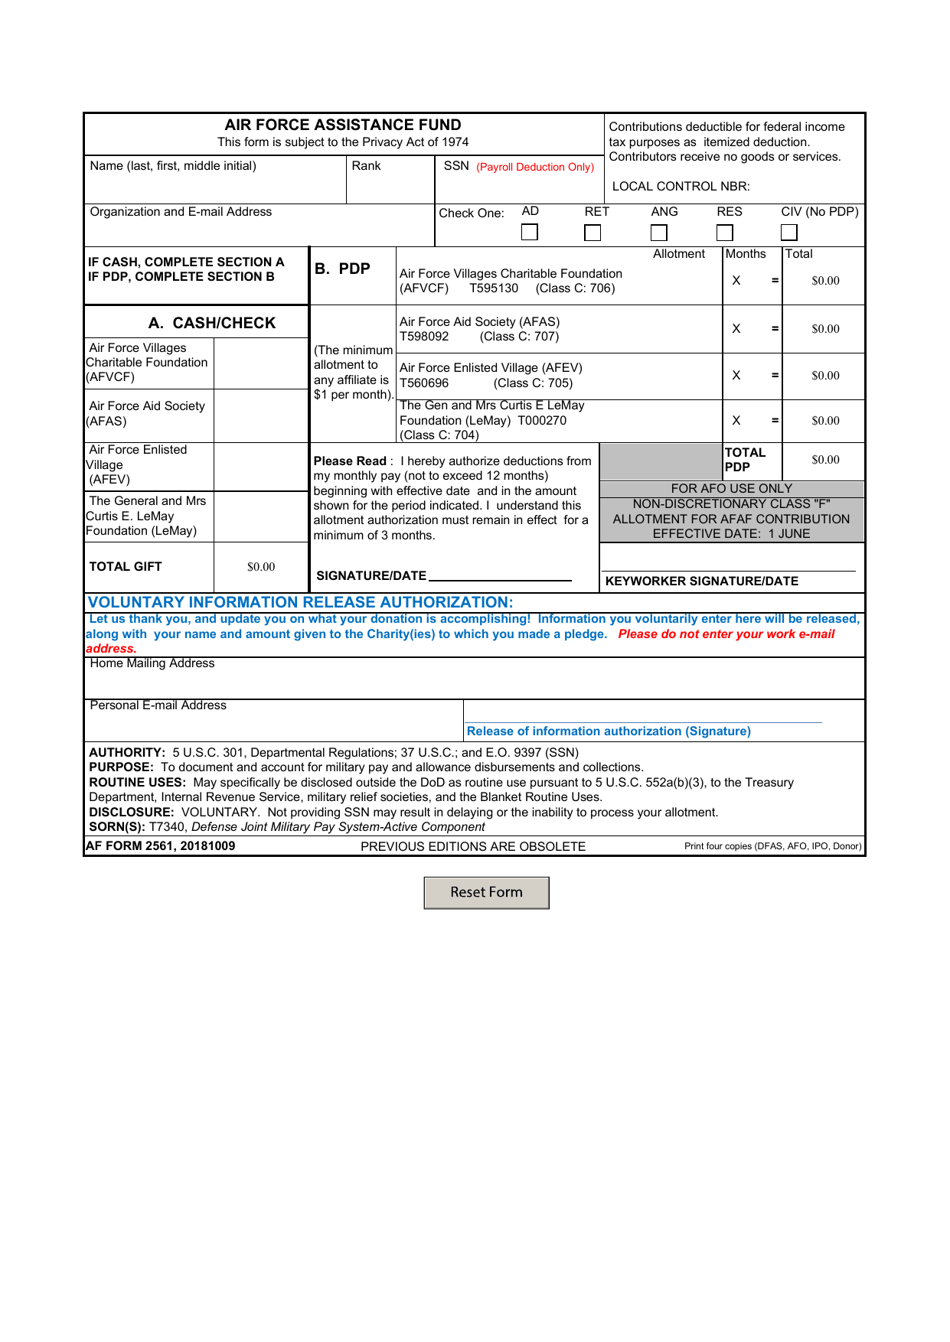 AF Form 2561 Air Force Assistance Fund, Page 1